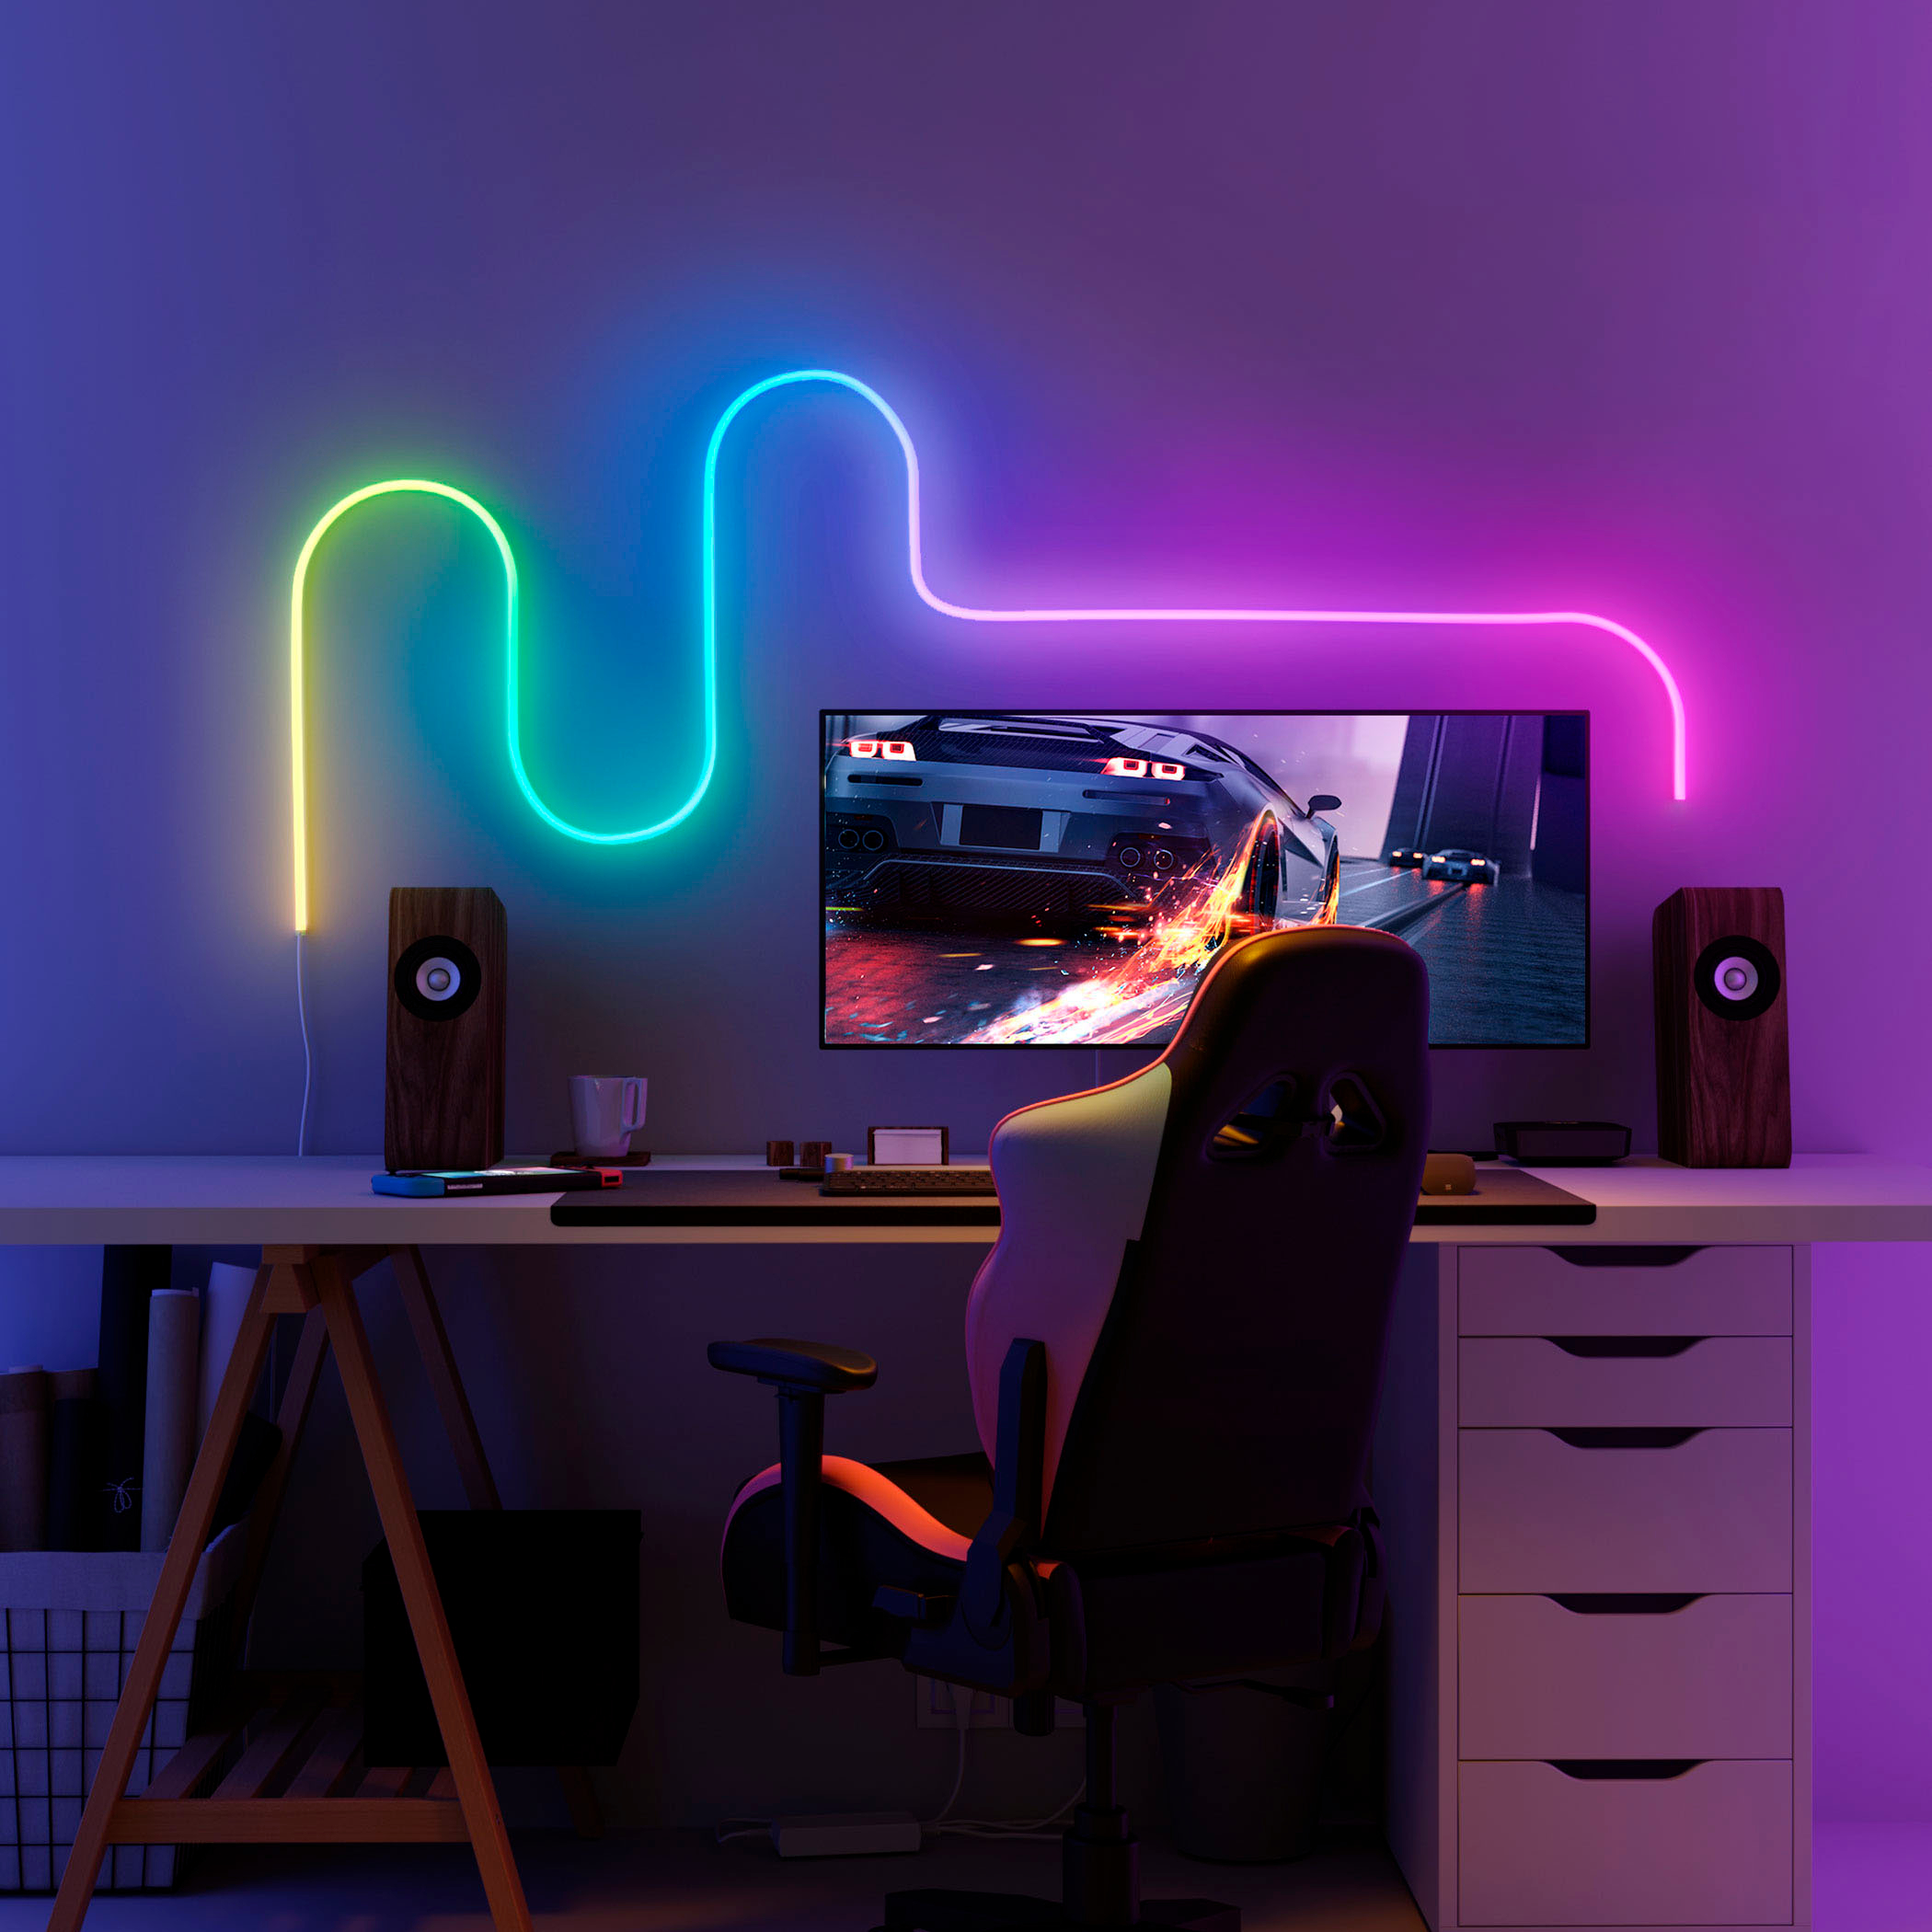 Govee Neon LED Strip Light 3m (H61A0)